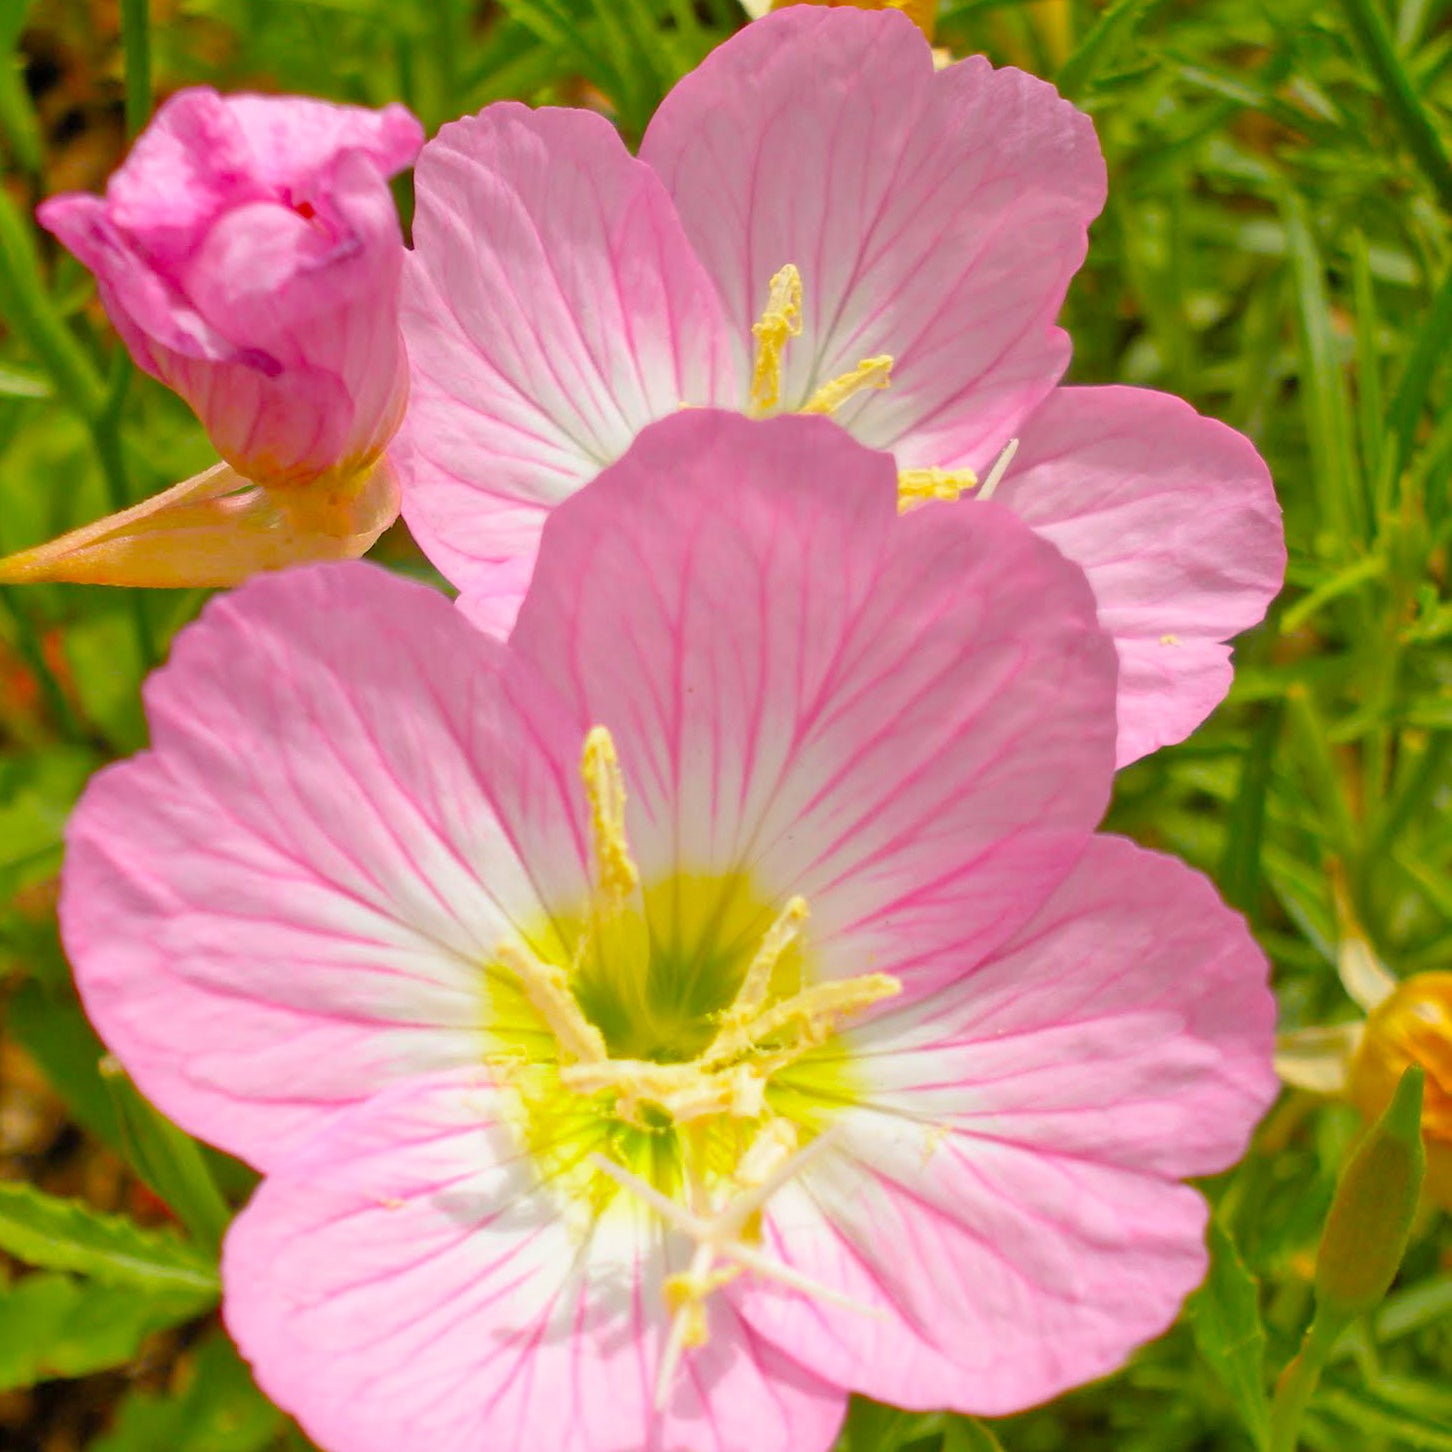 Yellowstone Pink Evening Primrose flowers